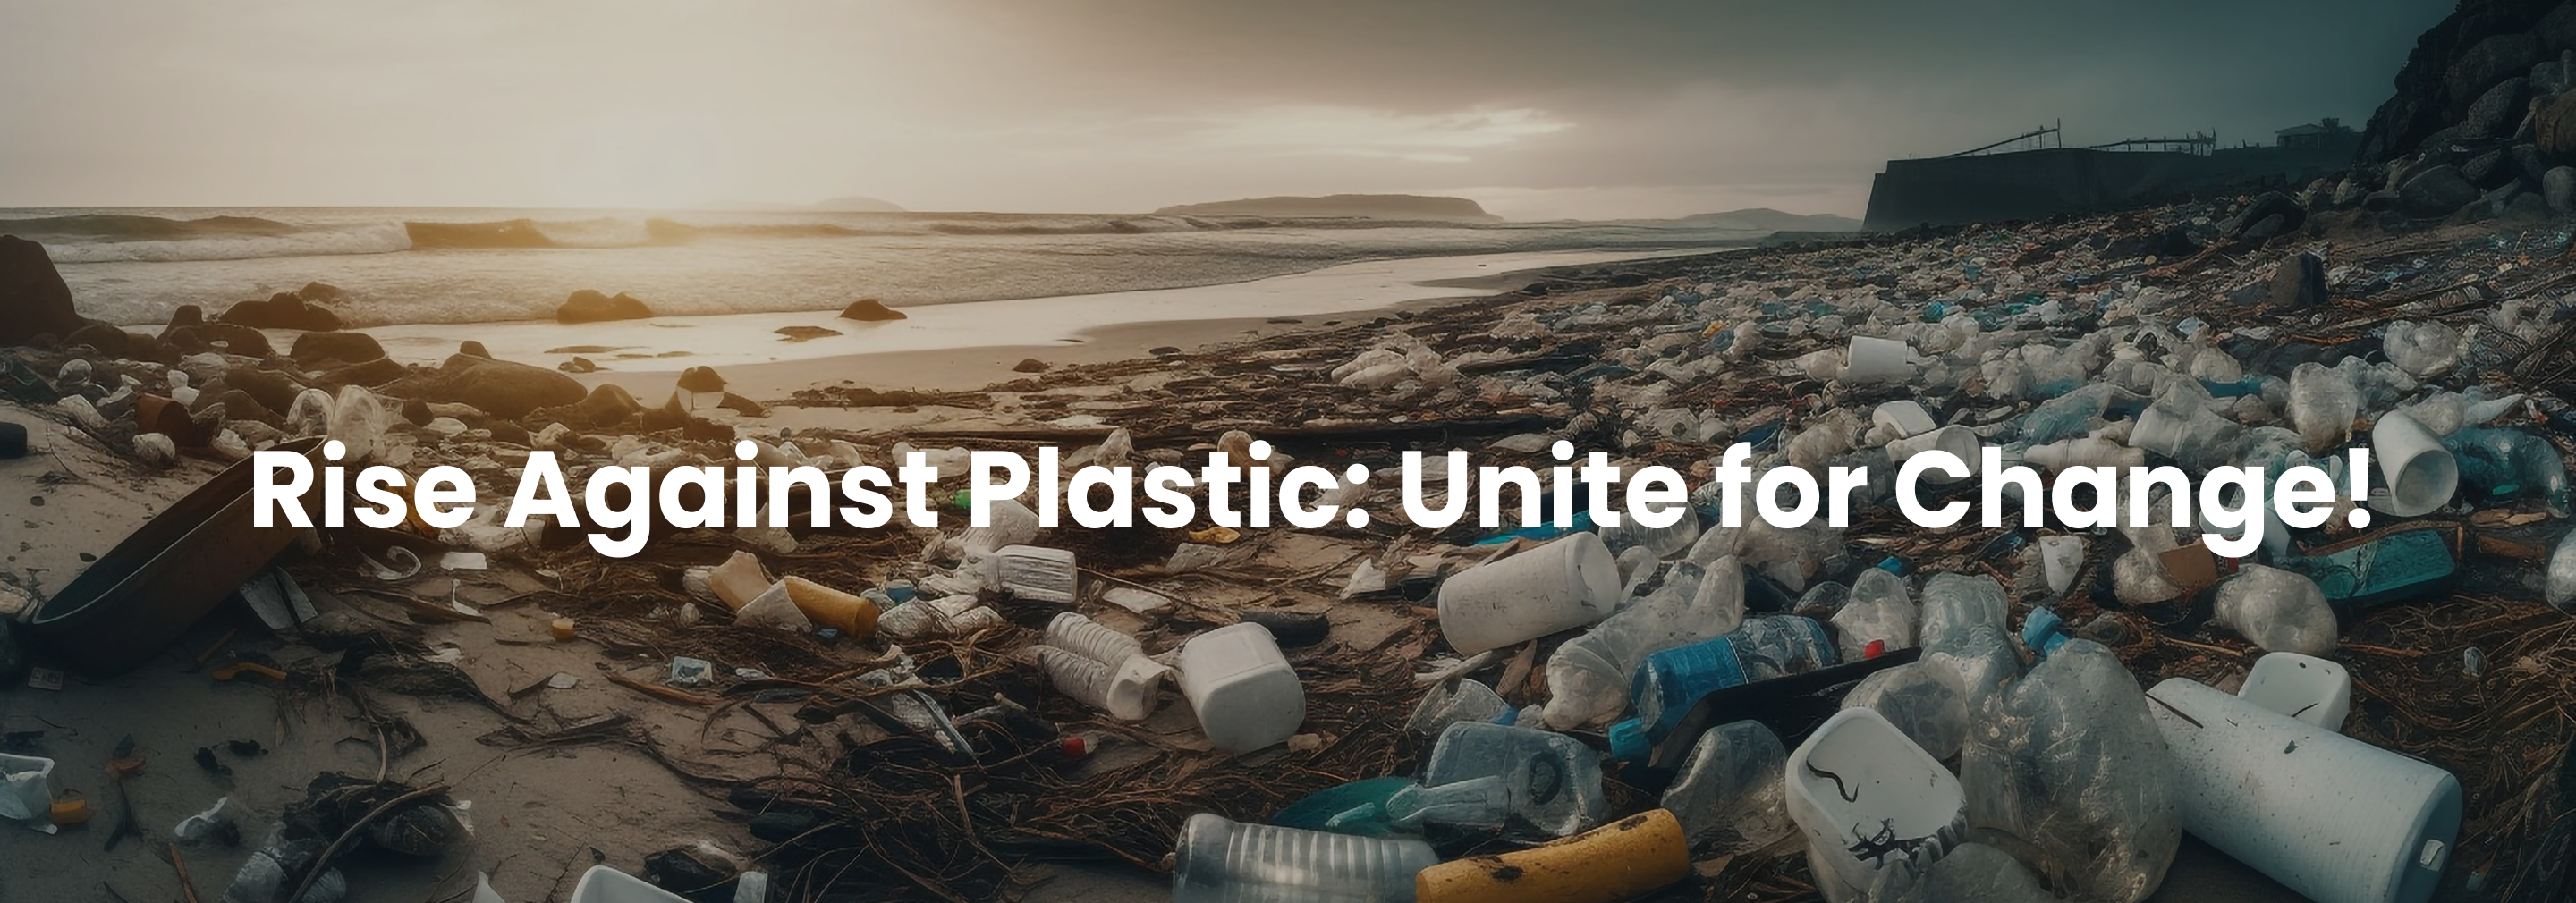 Rise Against Plastic Unite for Change 9